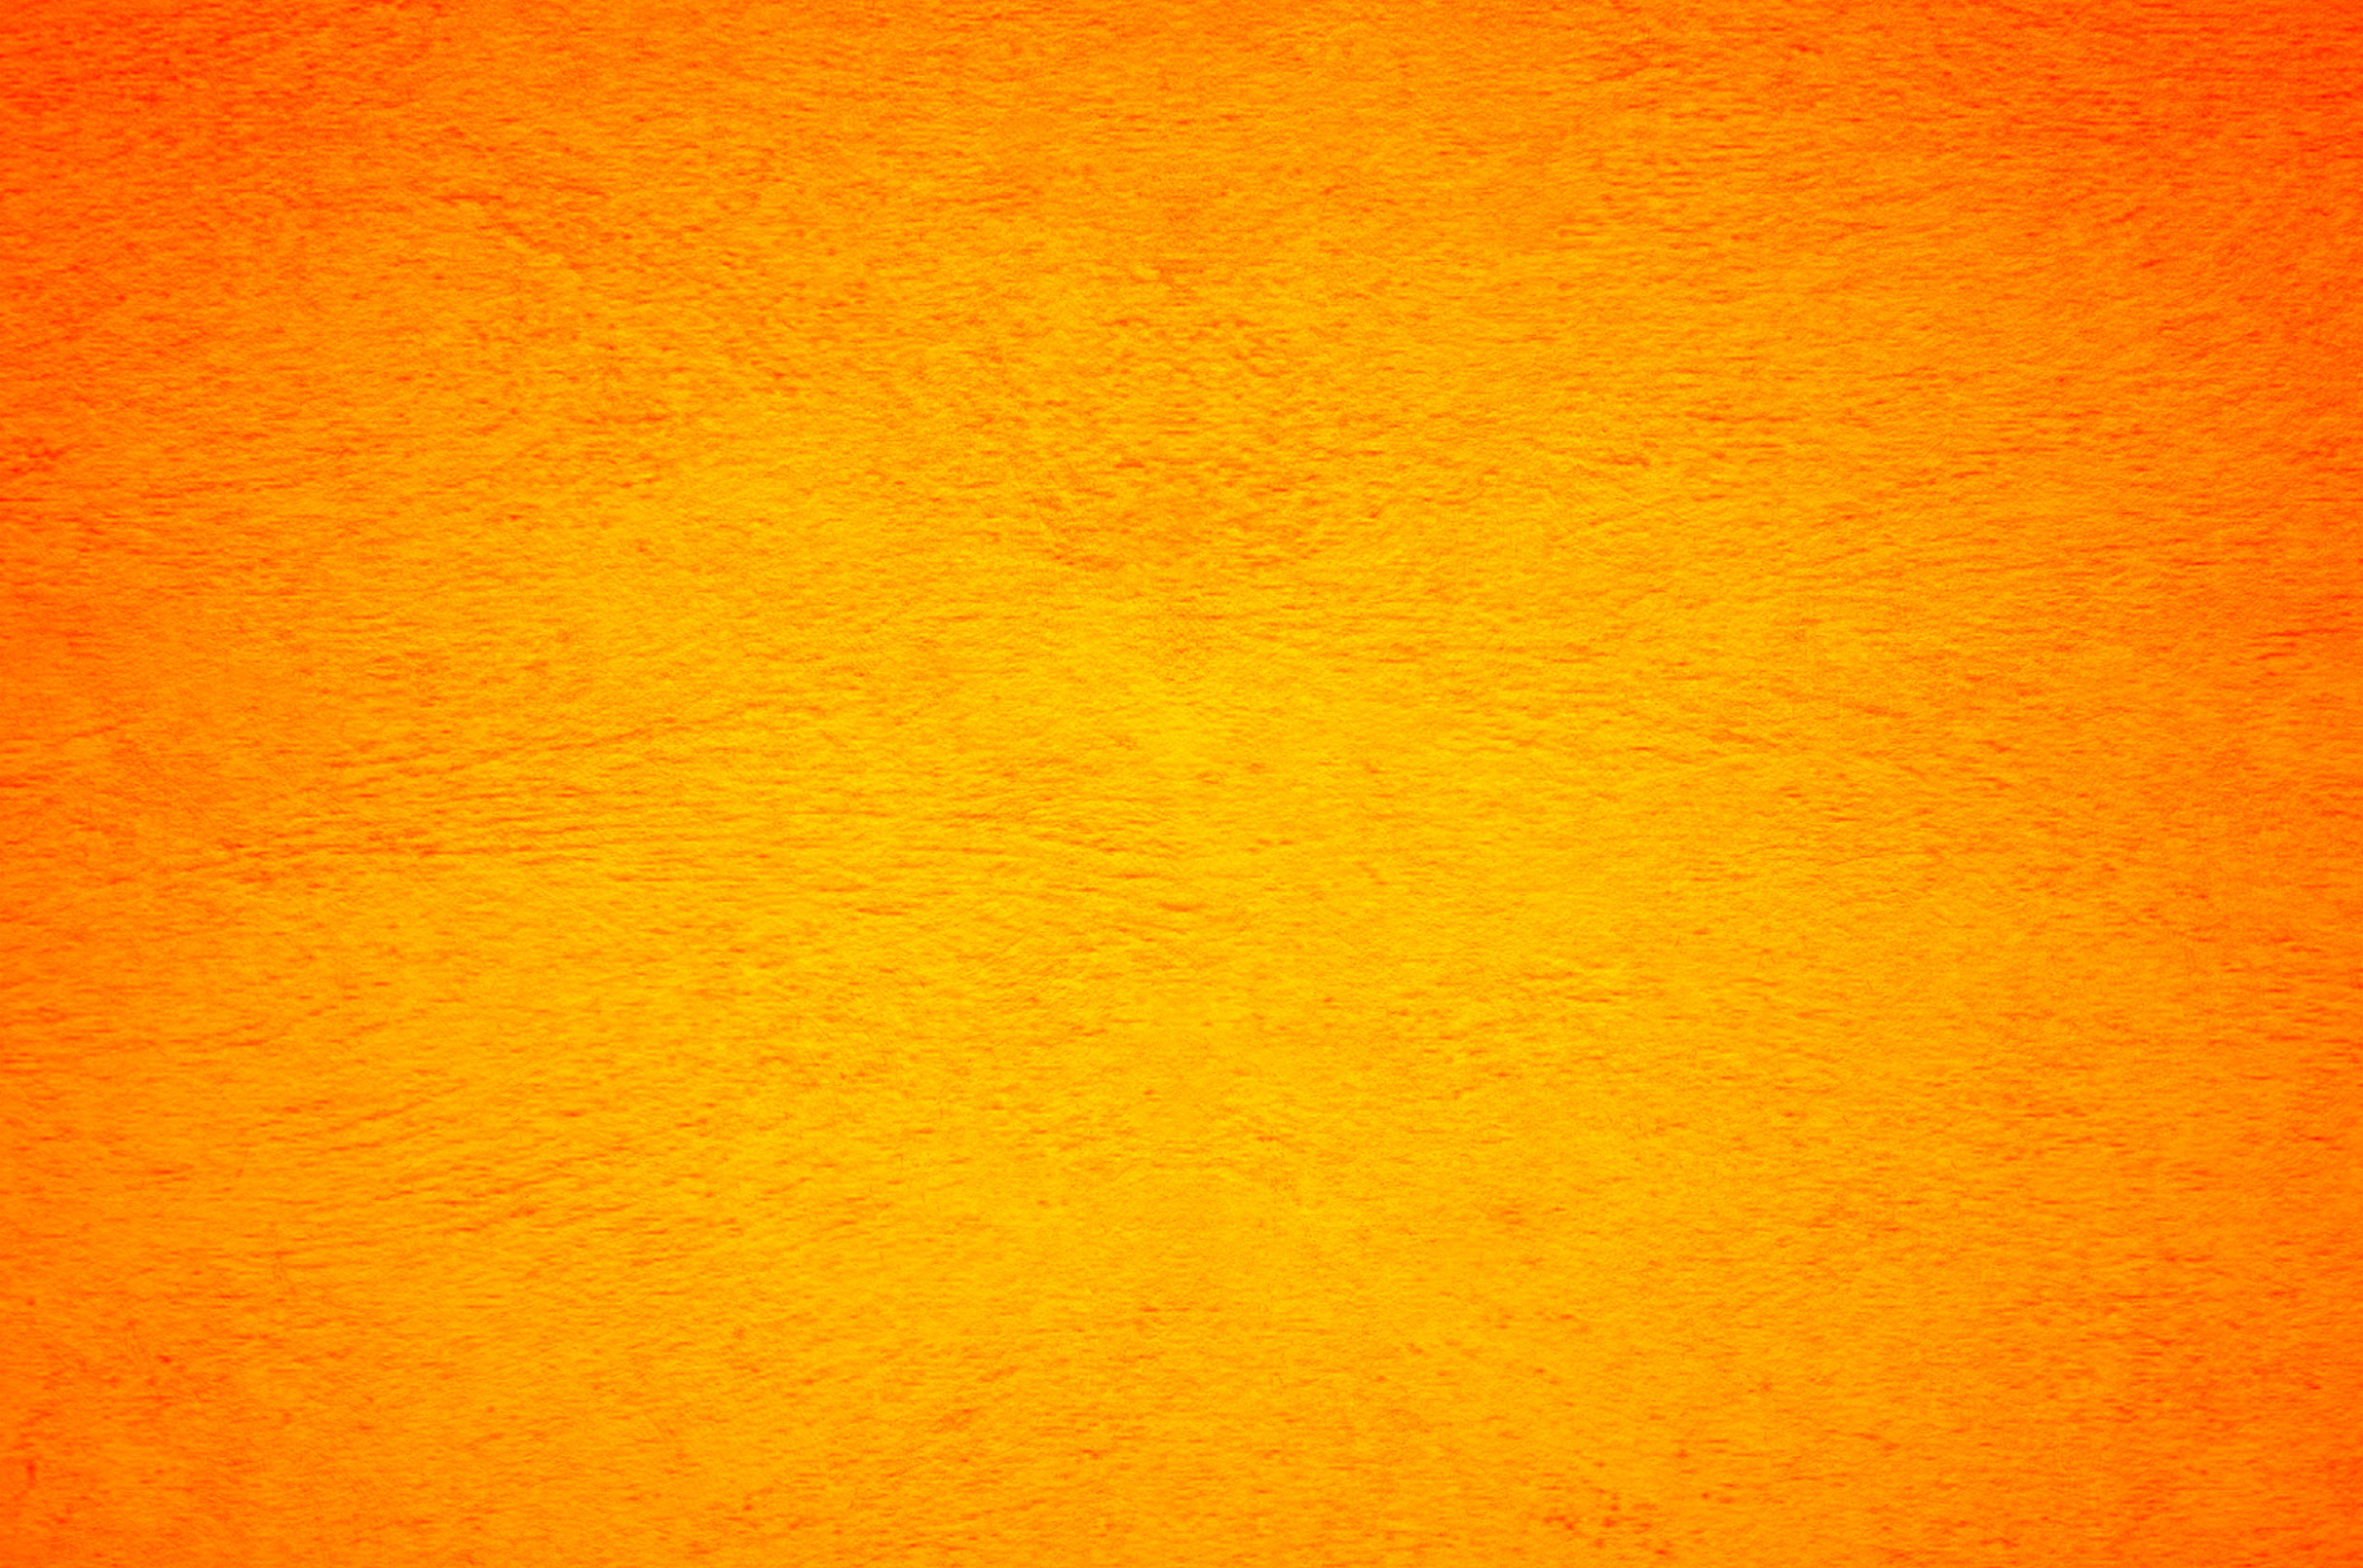 Orange on rough surface hacienda style photo